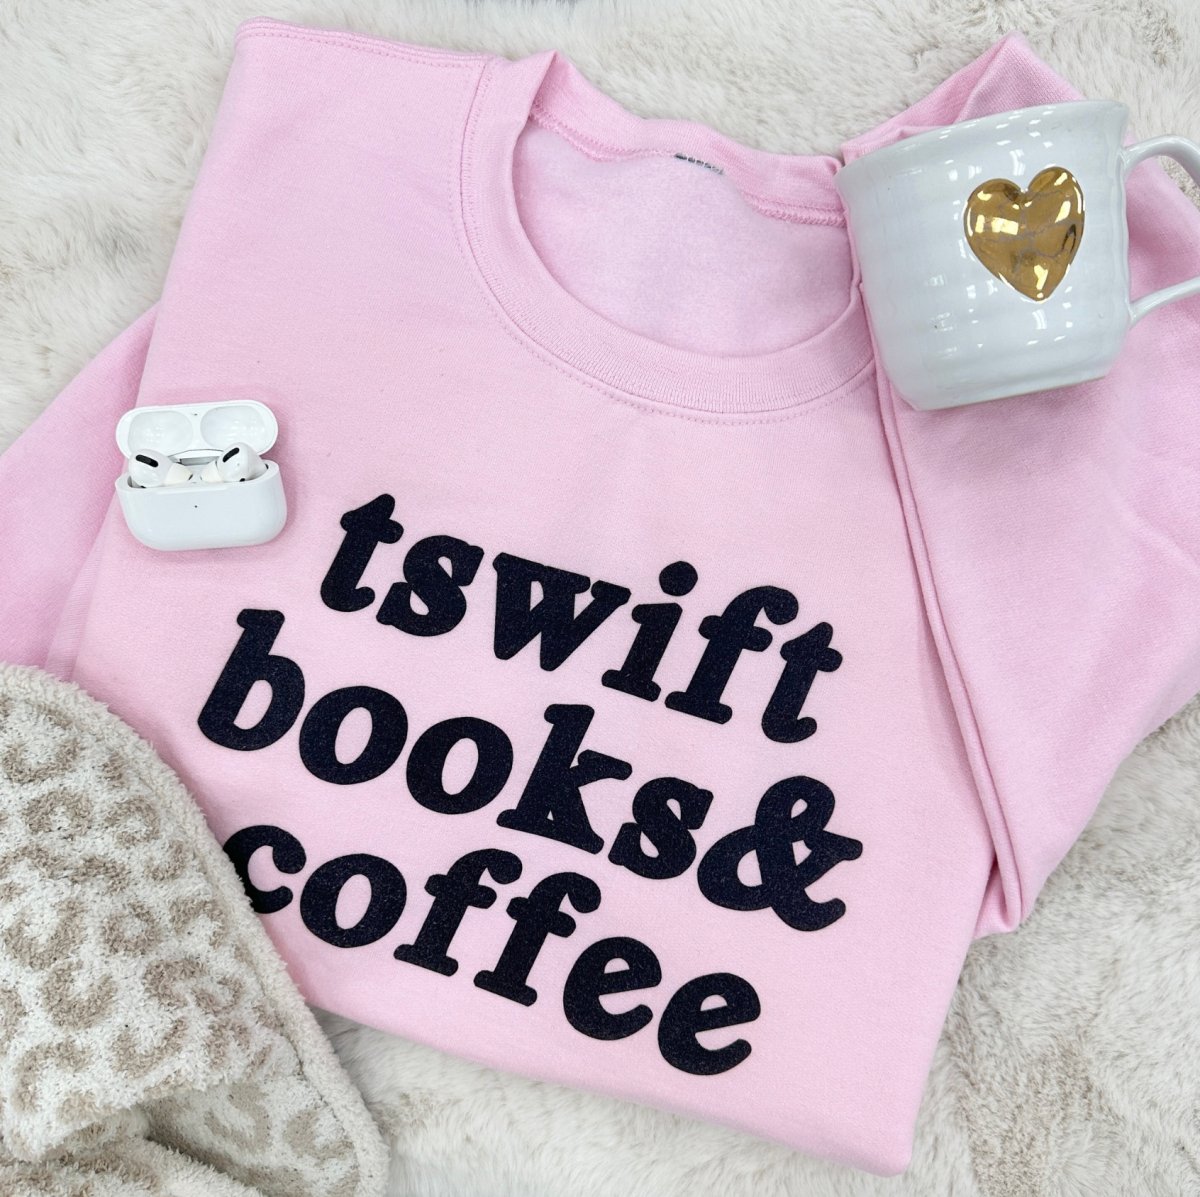 Make It Yours™ '...Books & Coffee' Crewneck Sweatshirt - United Monograms